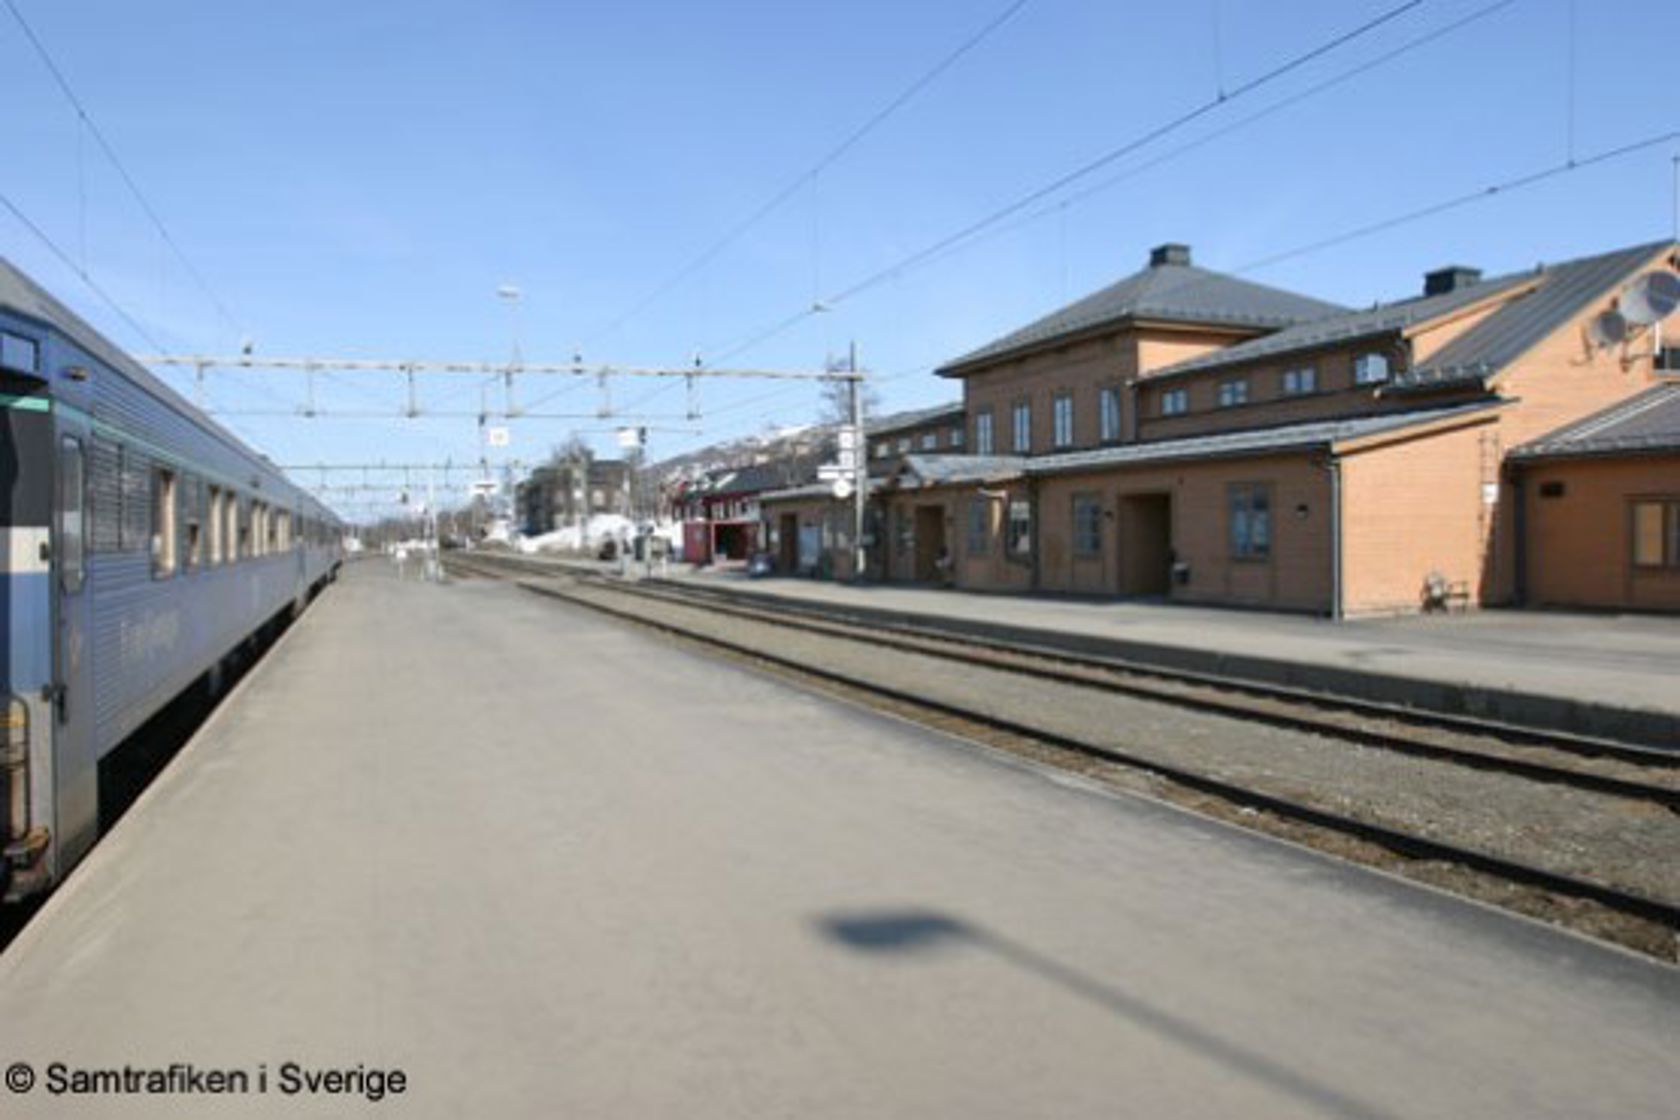 Exterior view of Storlien border station